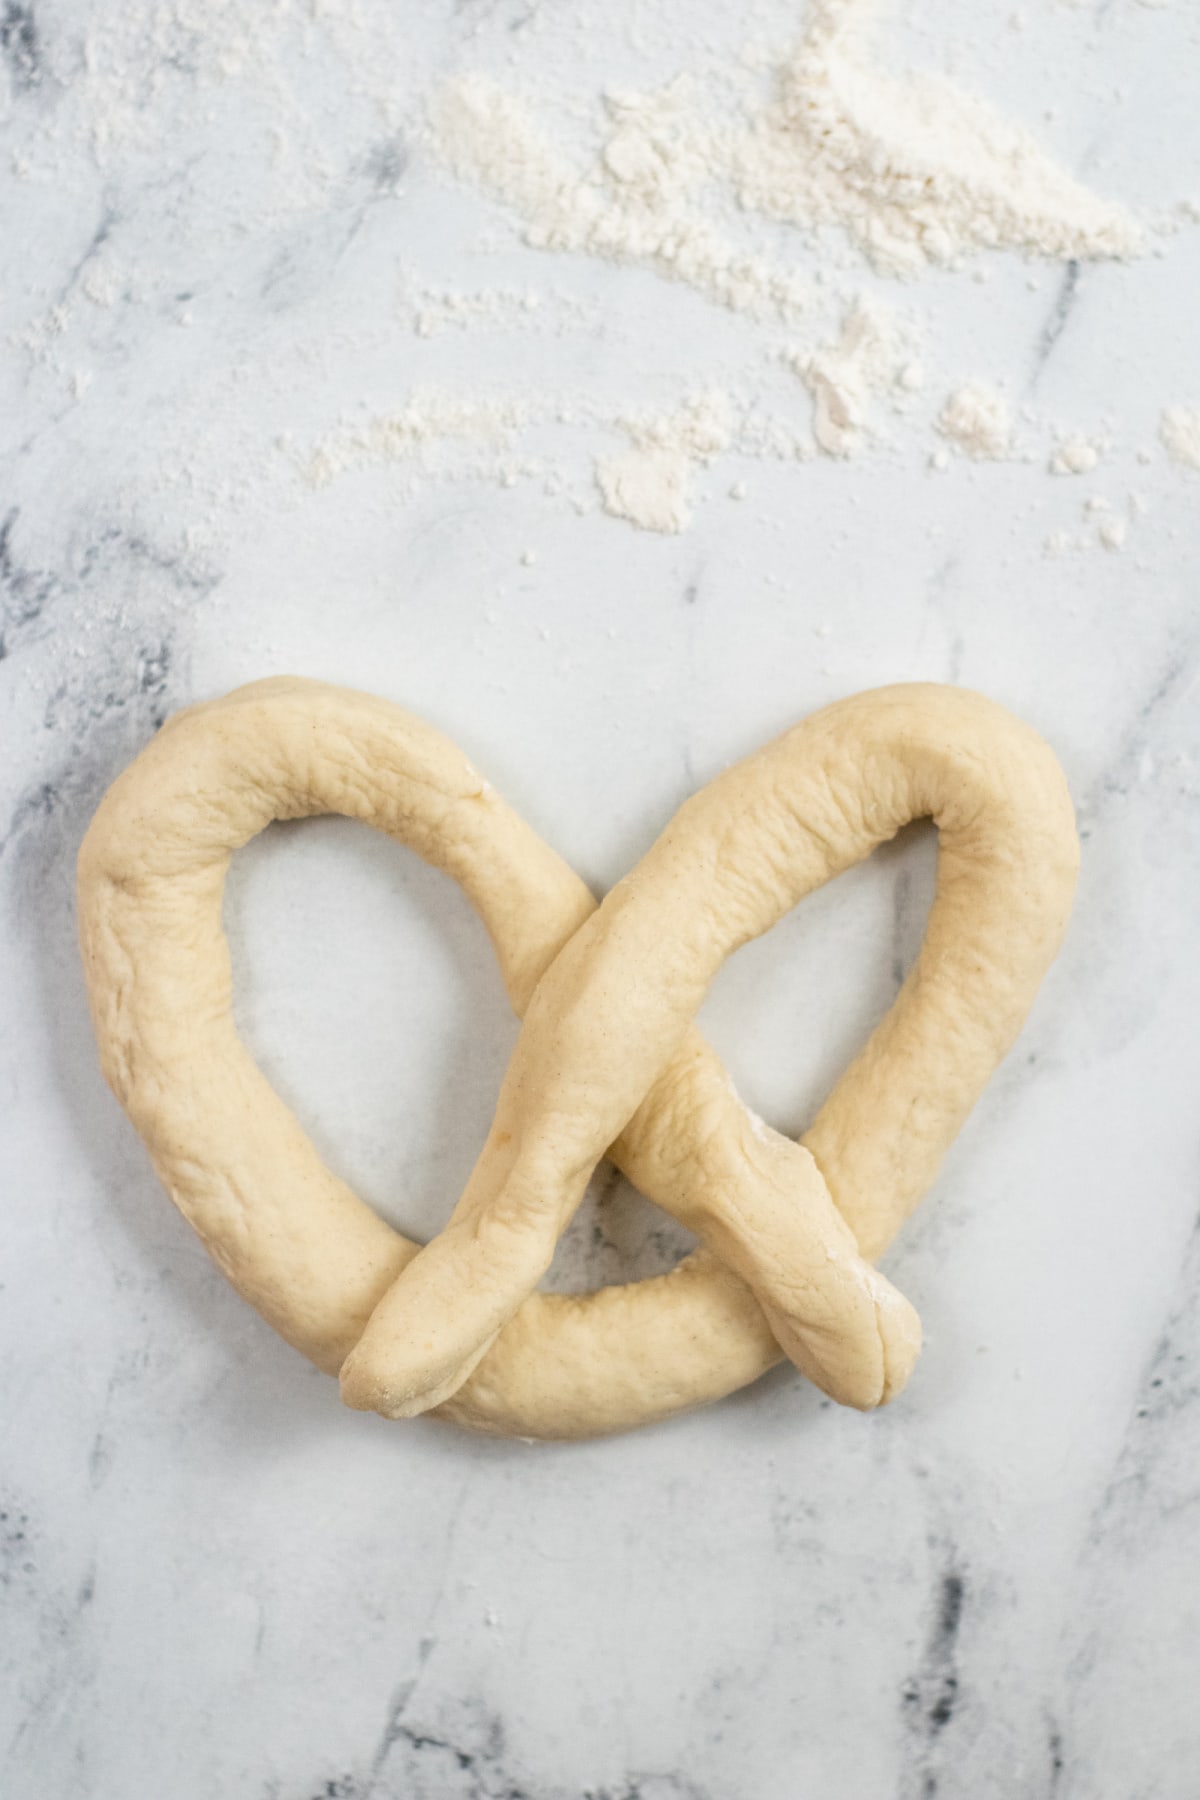 Forming a pretzel shape with dough